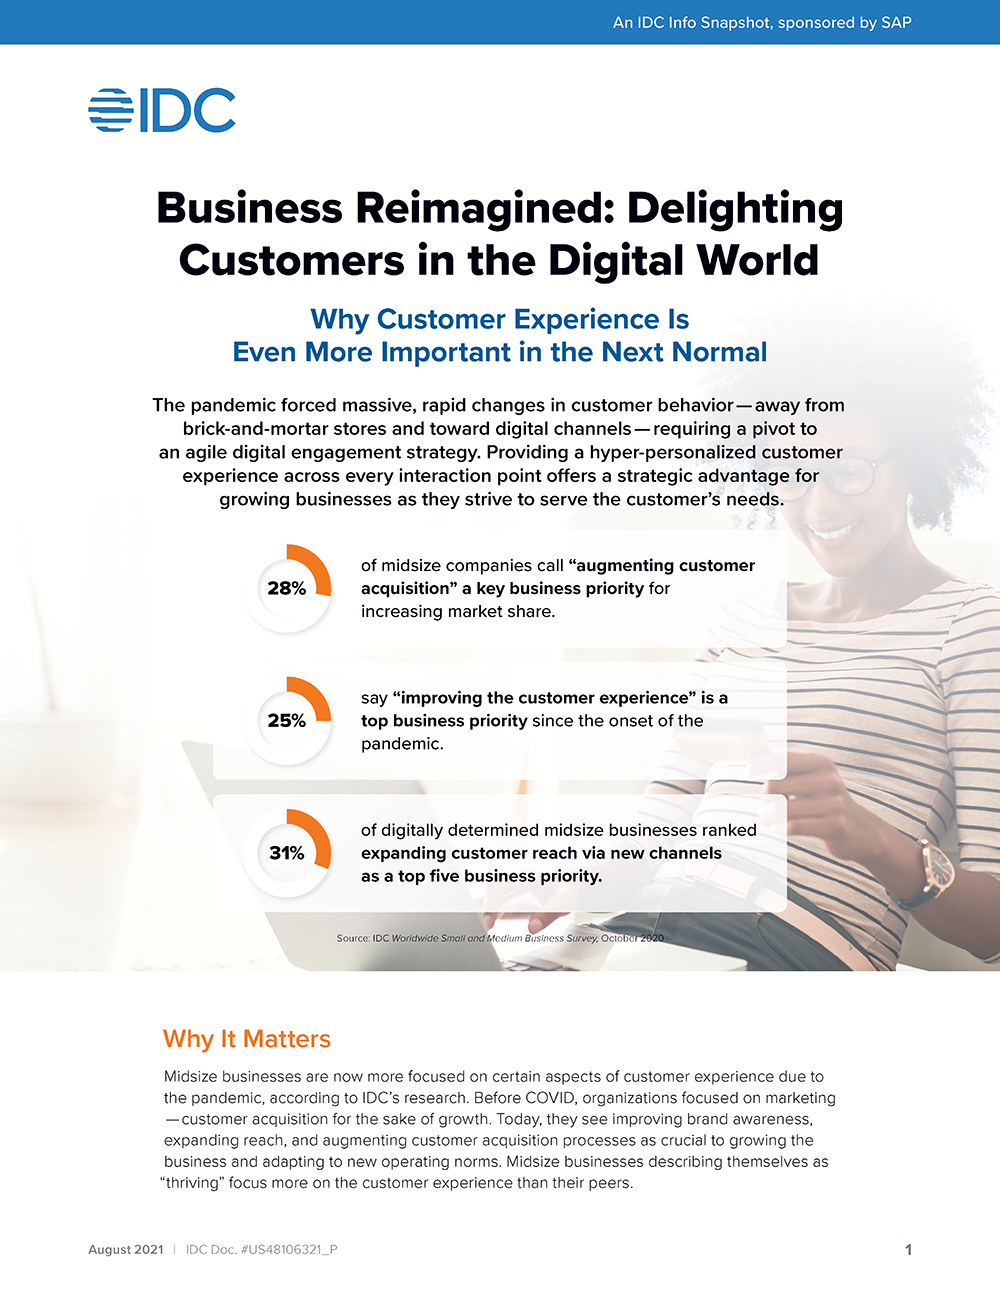 IDC Info Snapshot Business Reimagined Delighting Customers in the Digital World